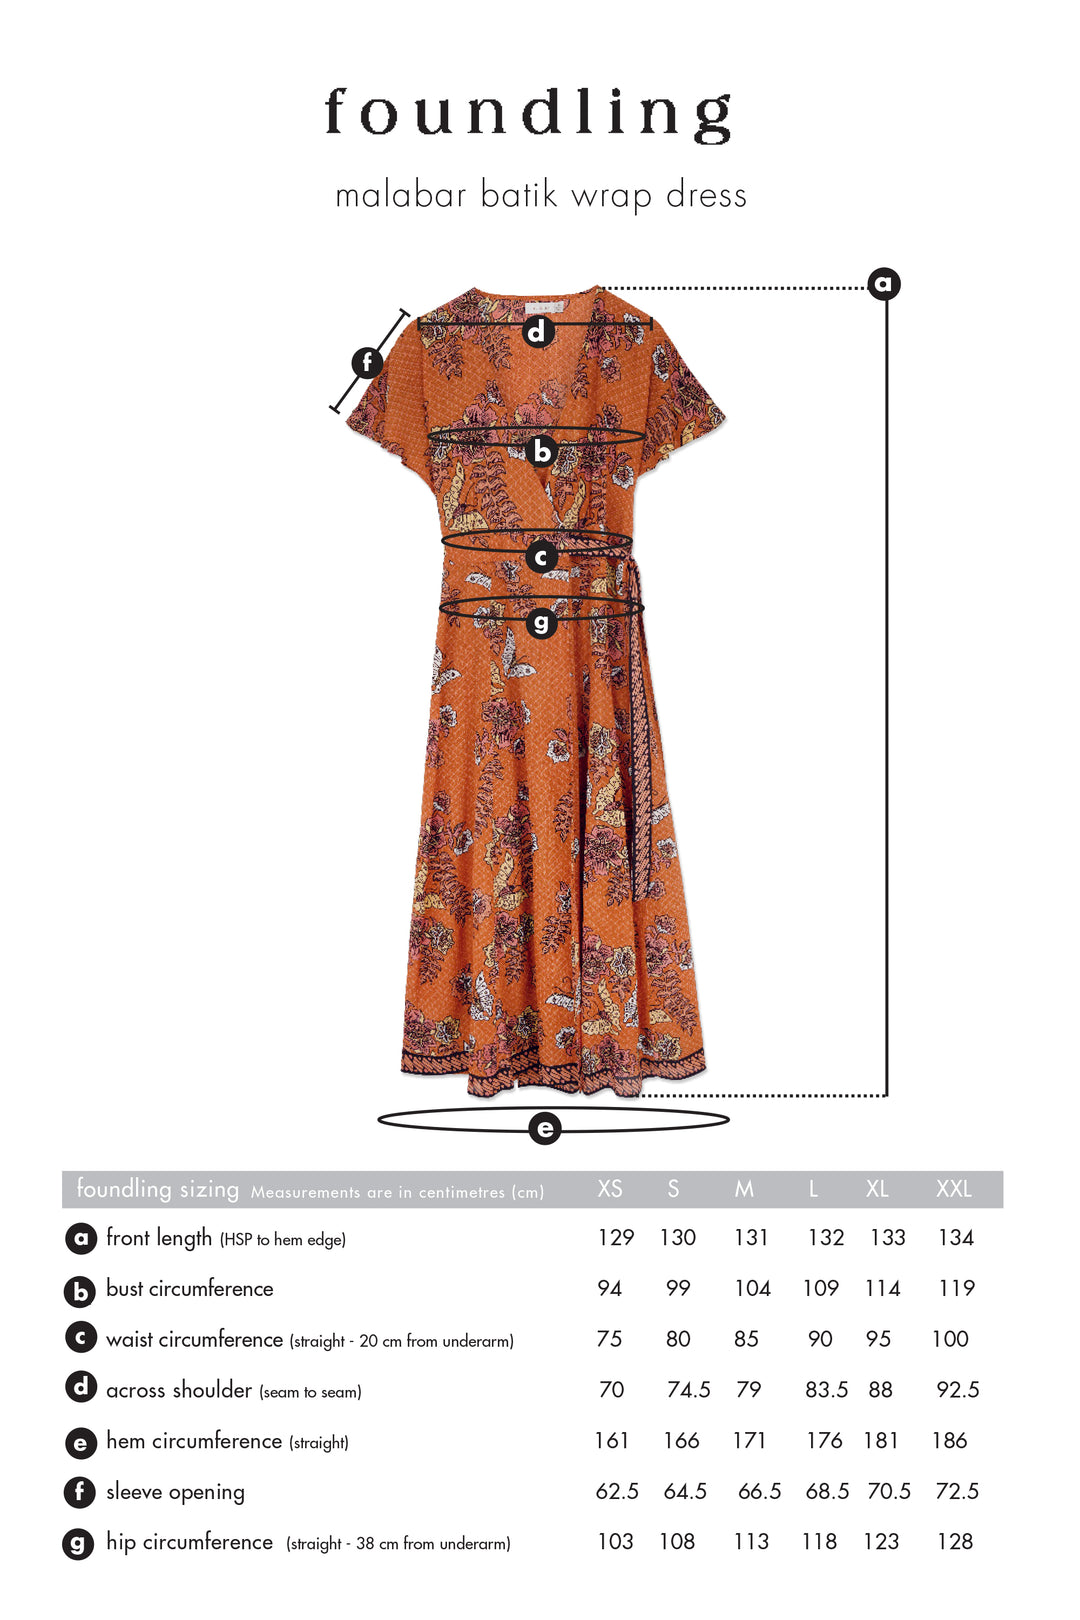 Madras Batik Wrap Dress